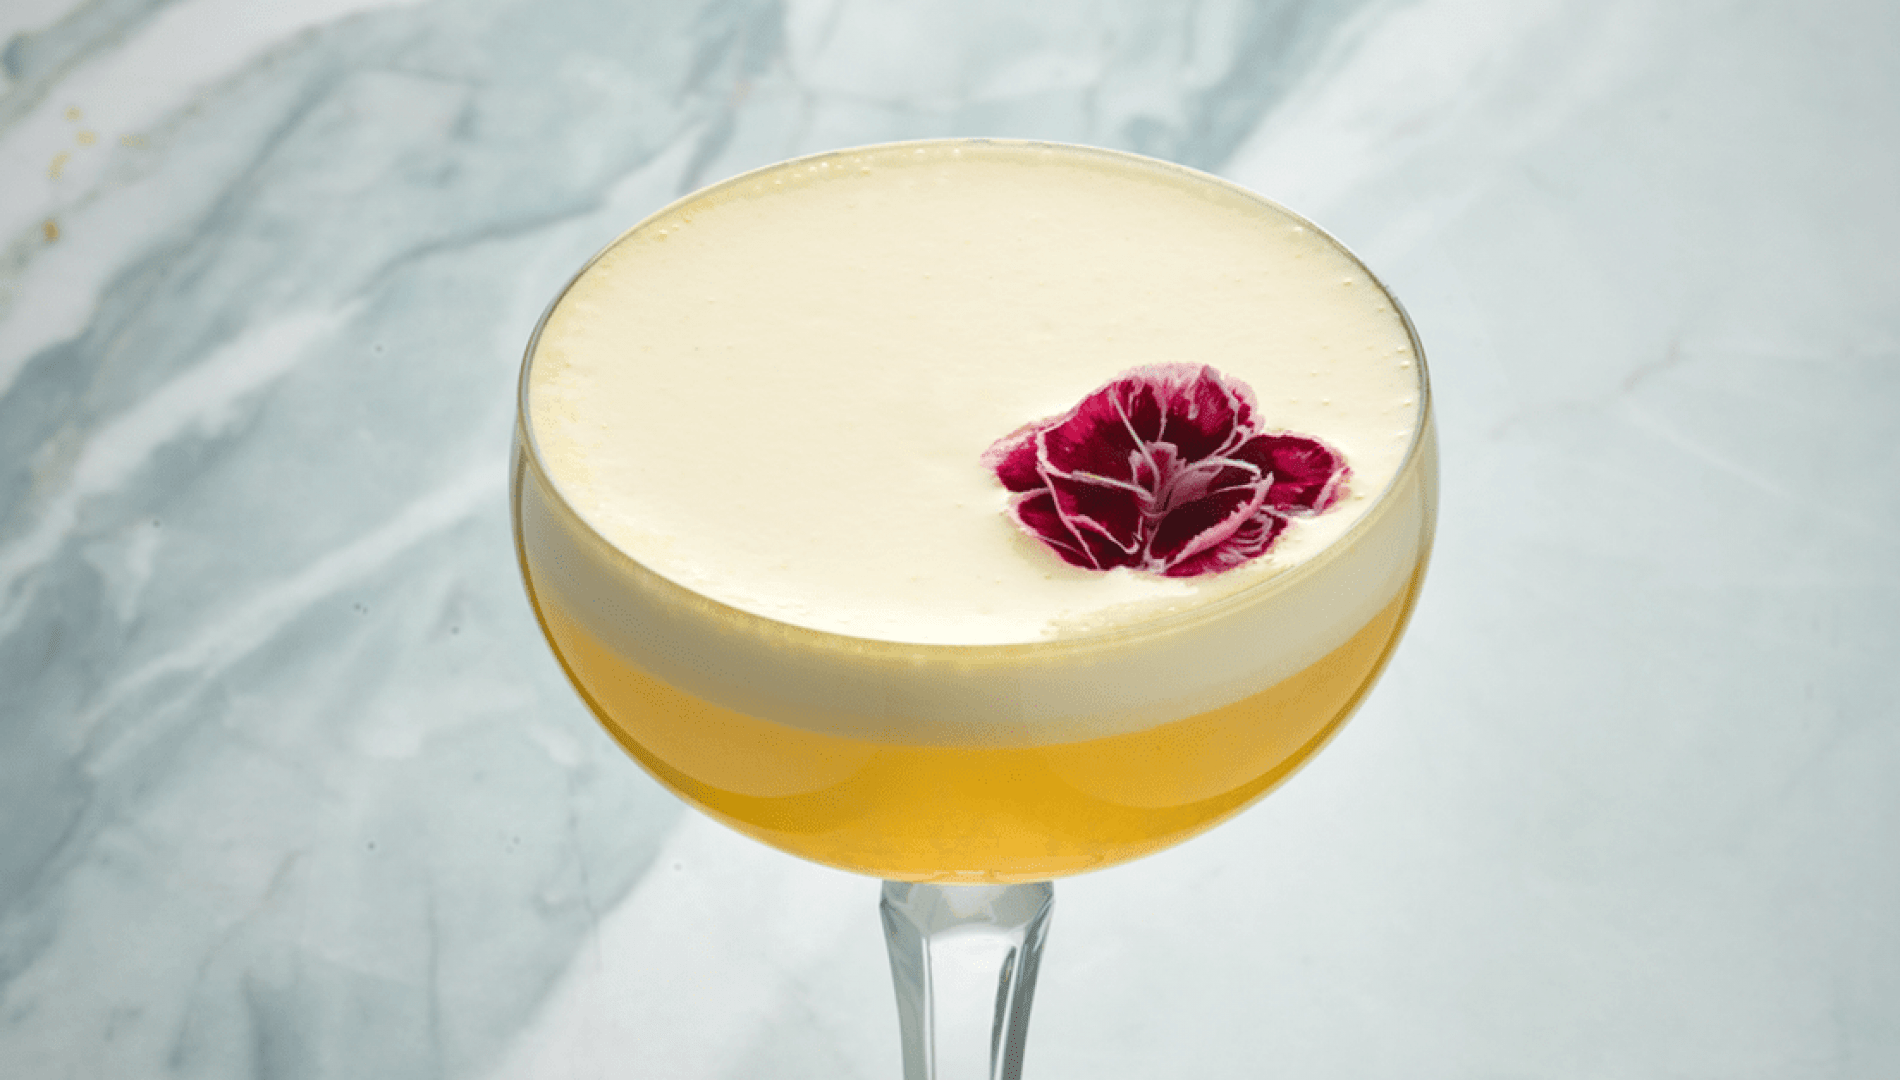 De cheeky Pornstar Martini cocktail van Craftails